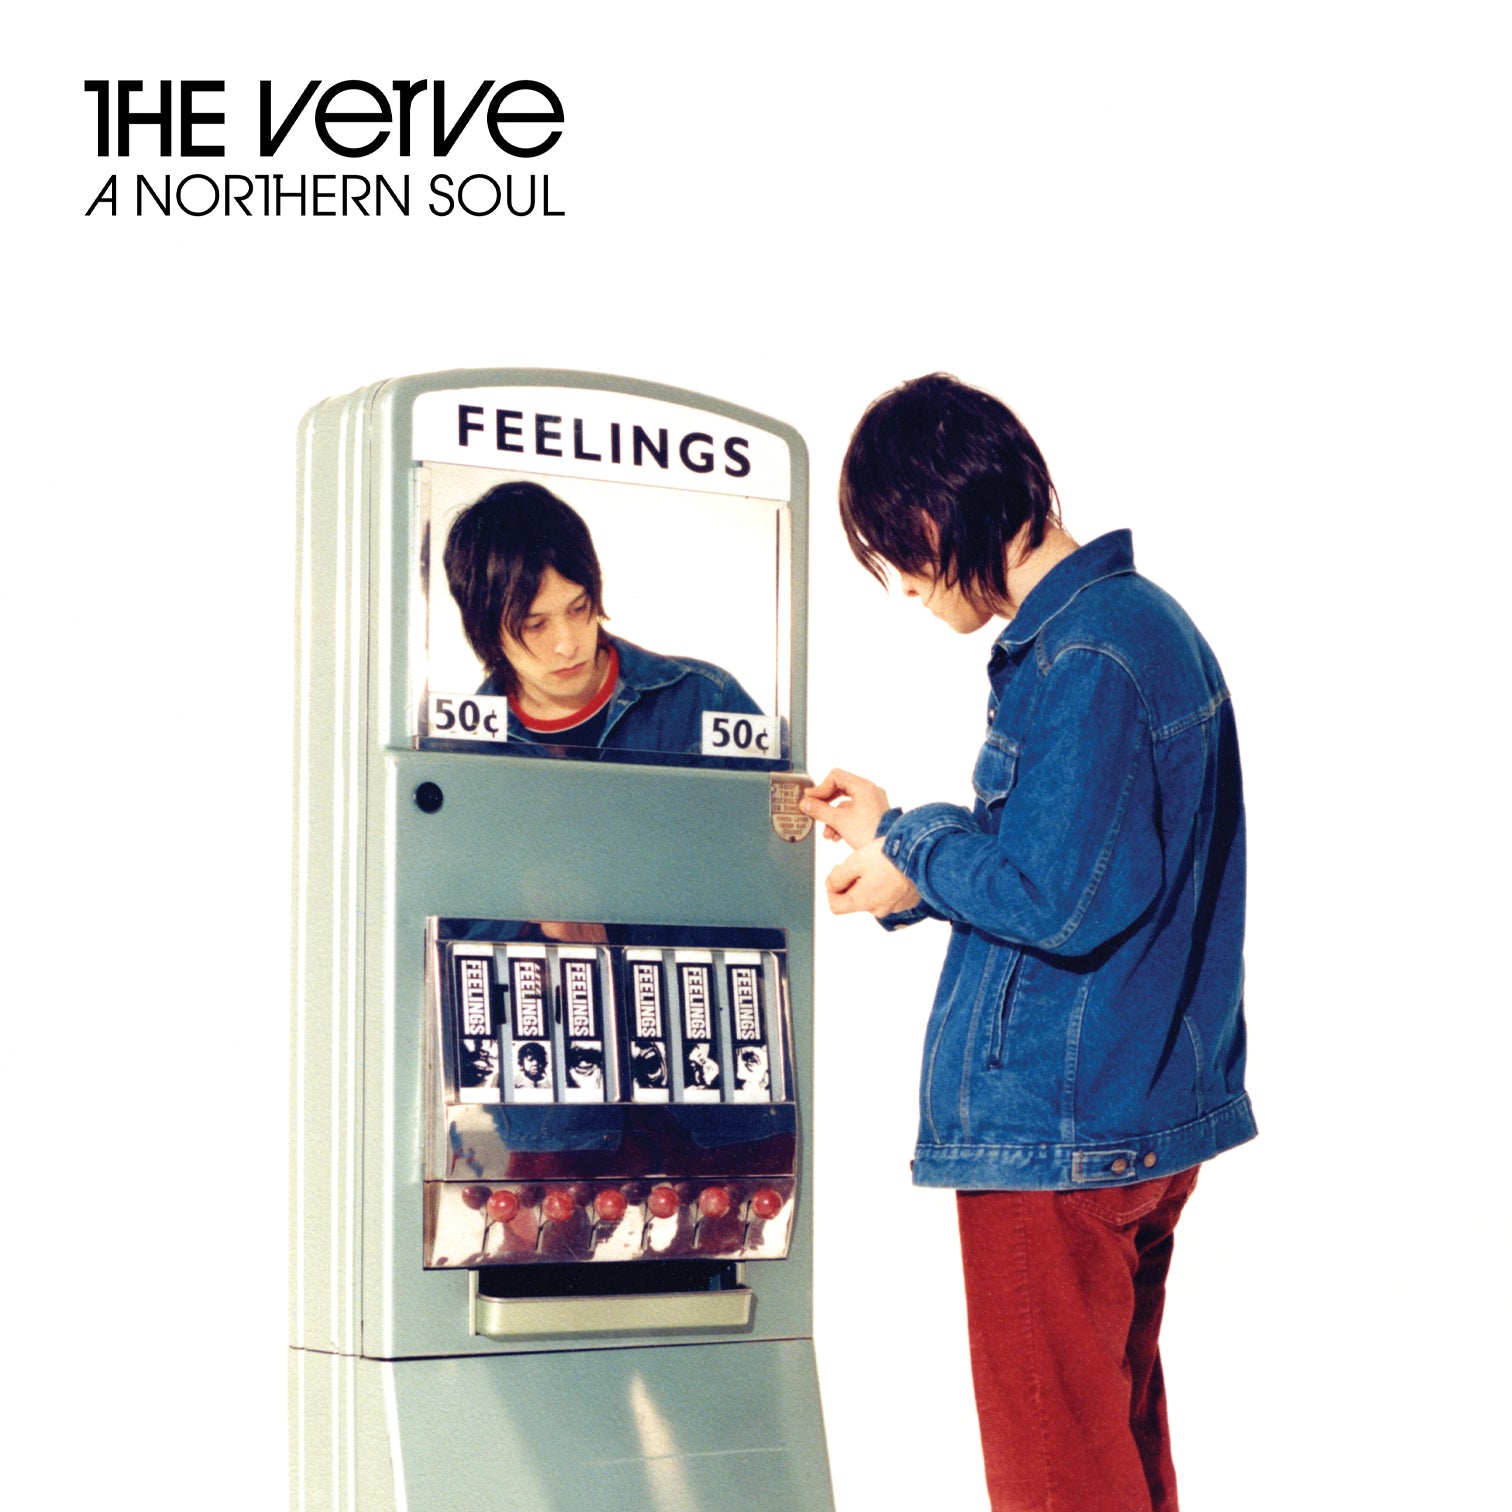 The Verve Feelings Vending Machine Promo Print - New Item